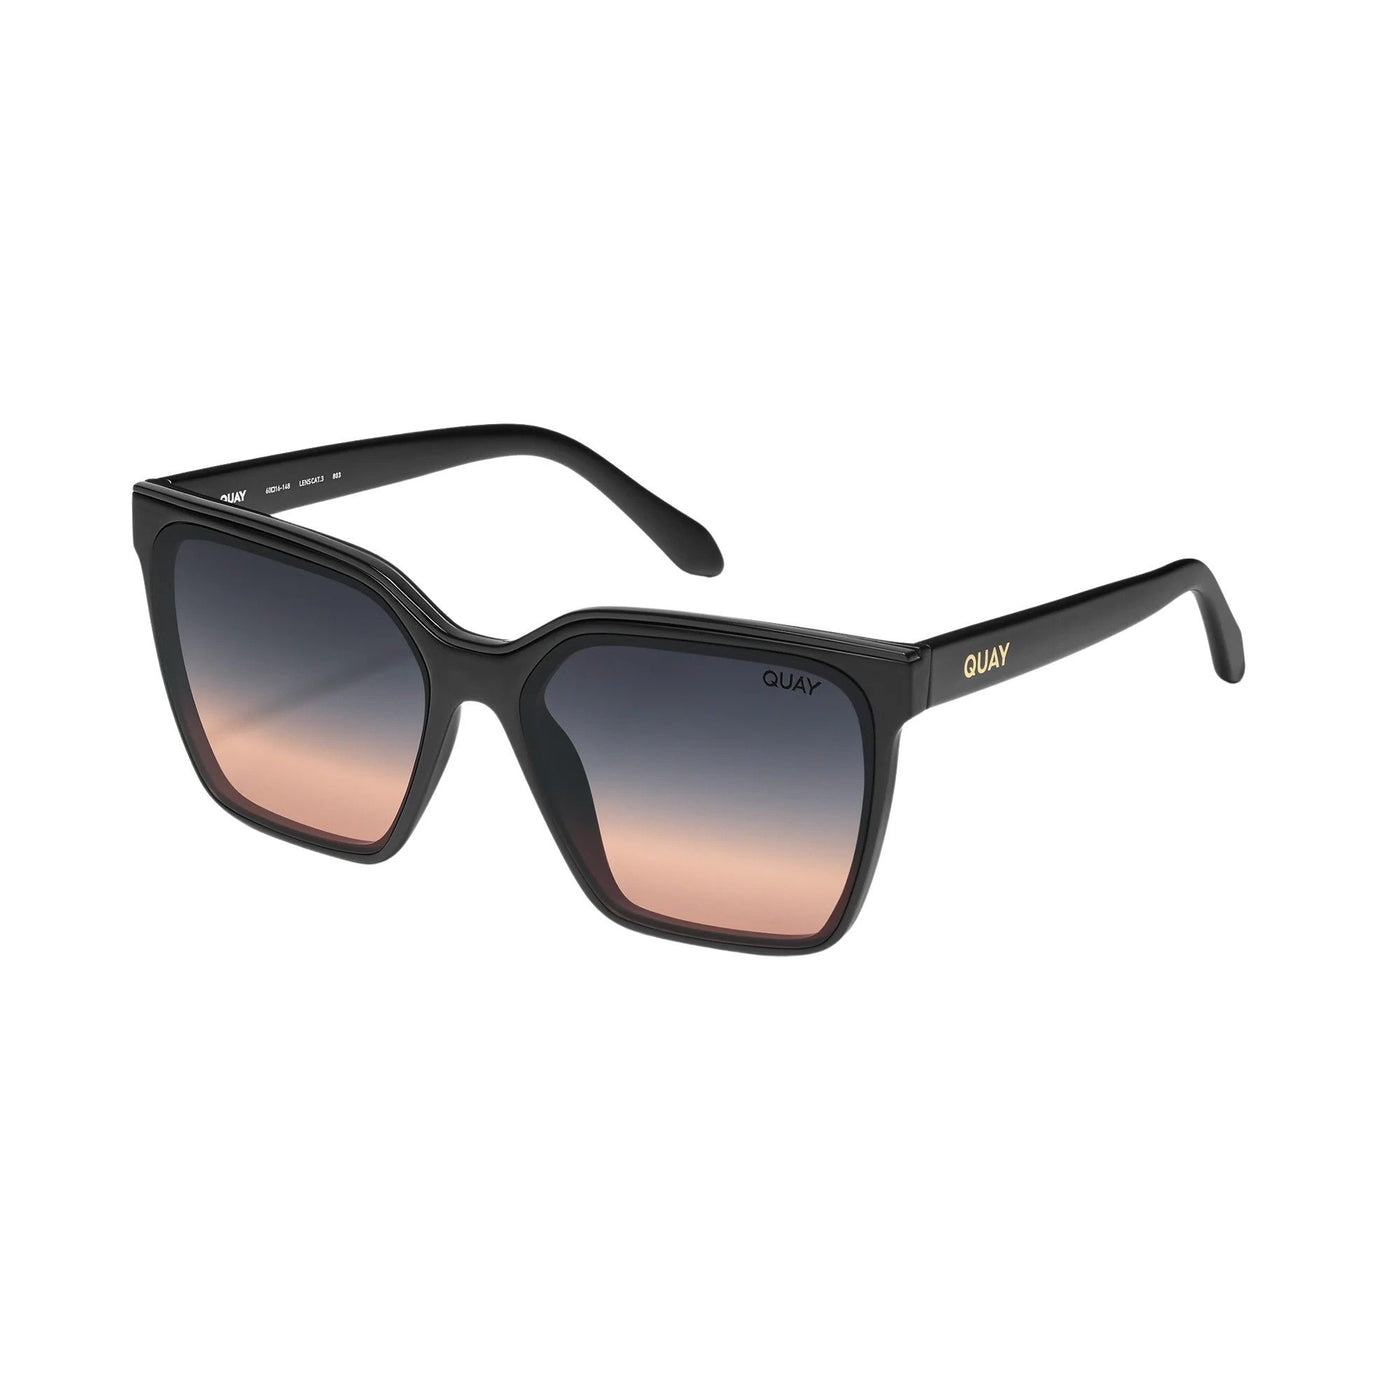 Quay Women's Level Up Square Sunglasses (Matte Black Frame/Black Fade to Coral Lens) - 3/4 angle